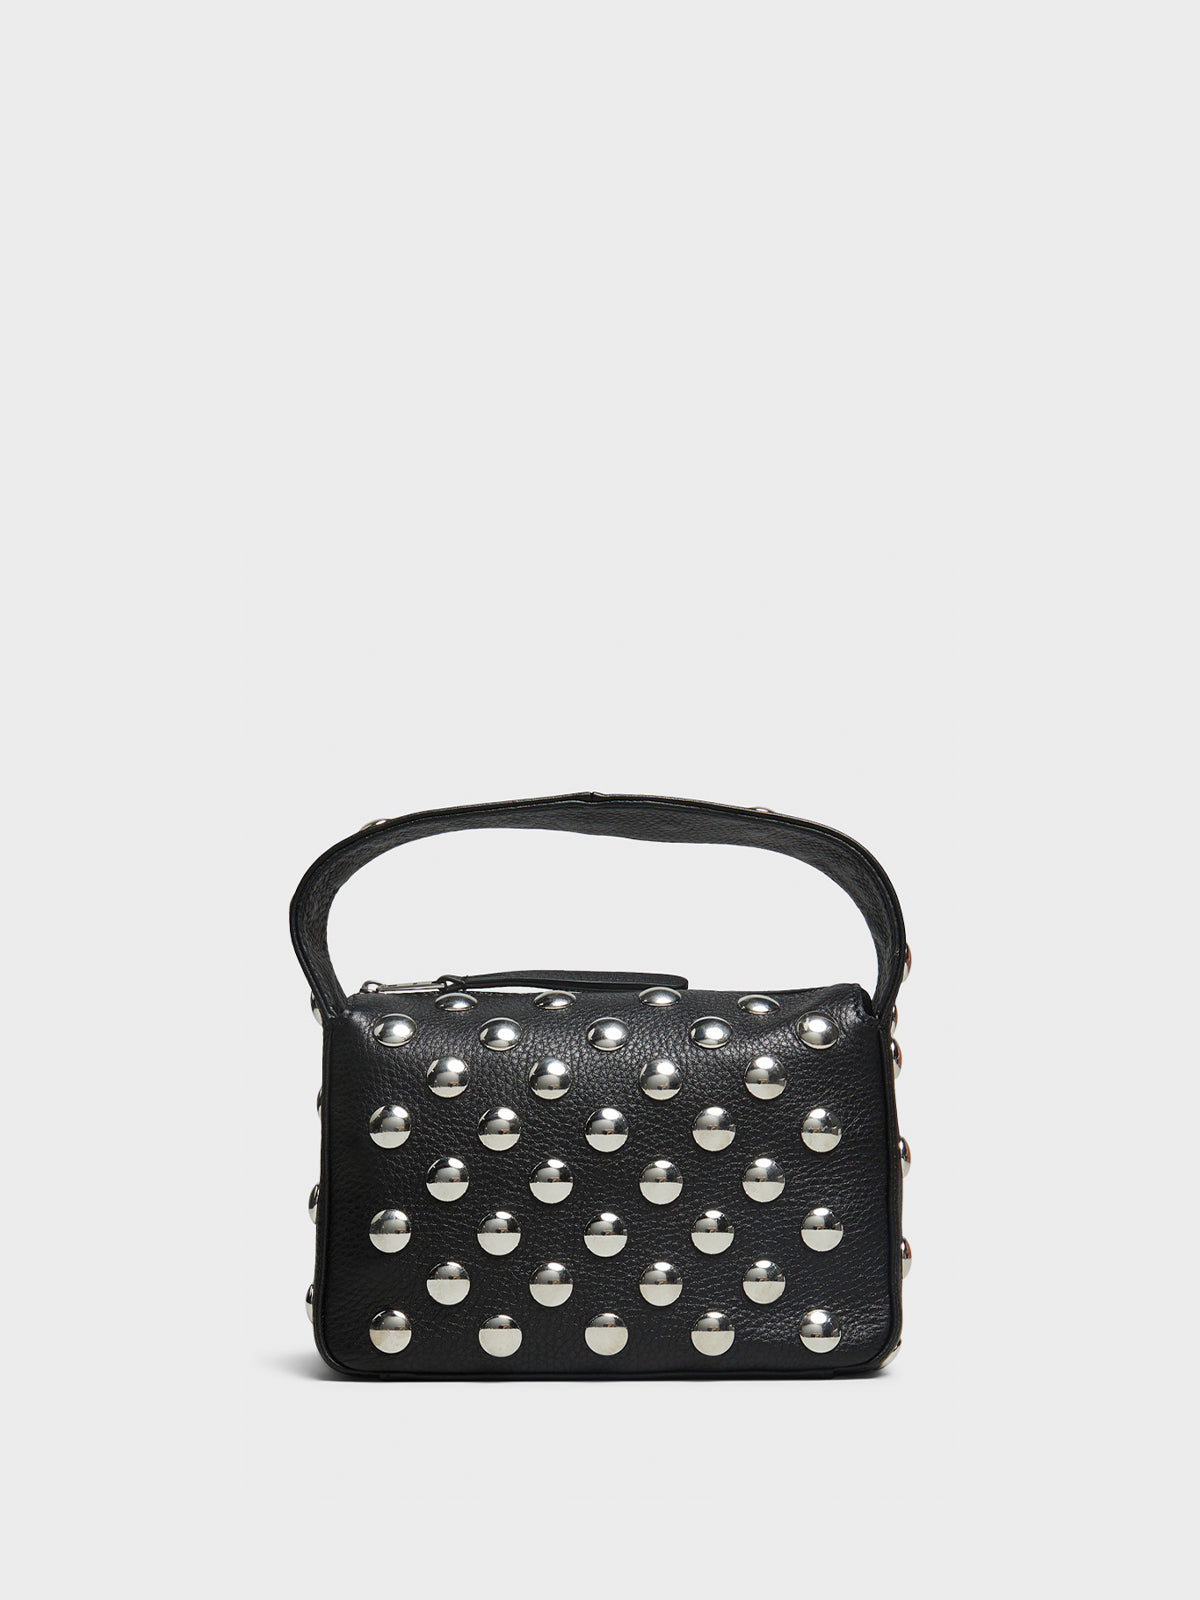 Elena Small Handbag in Black